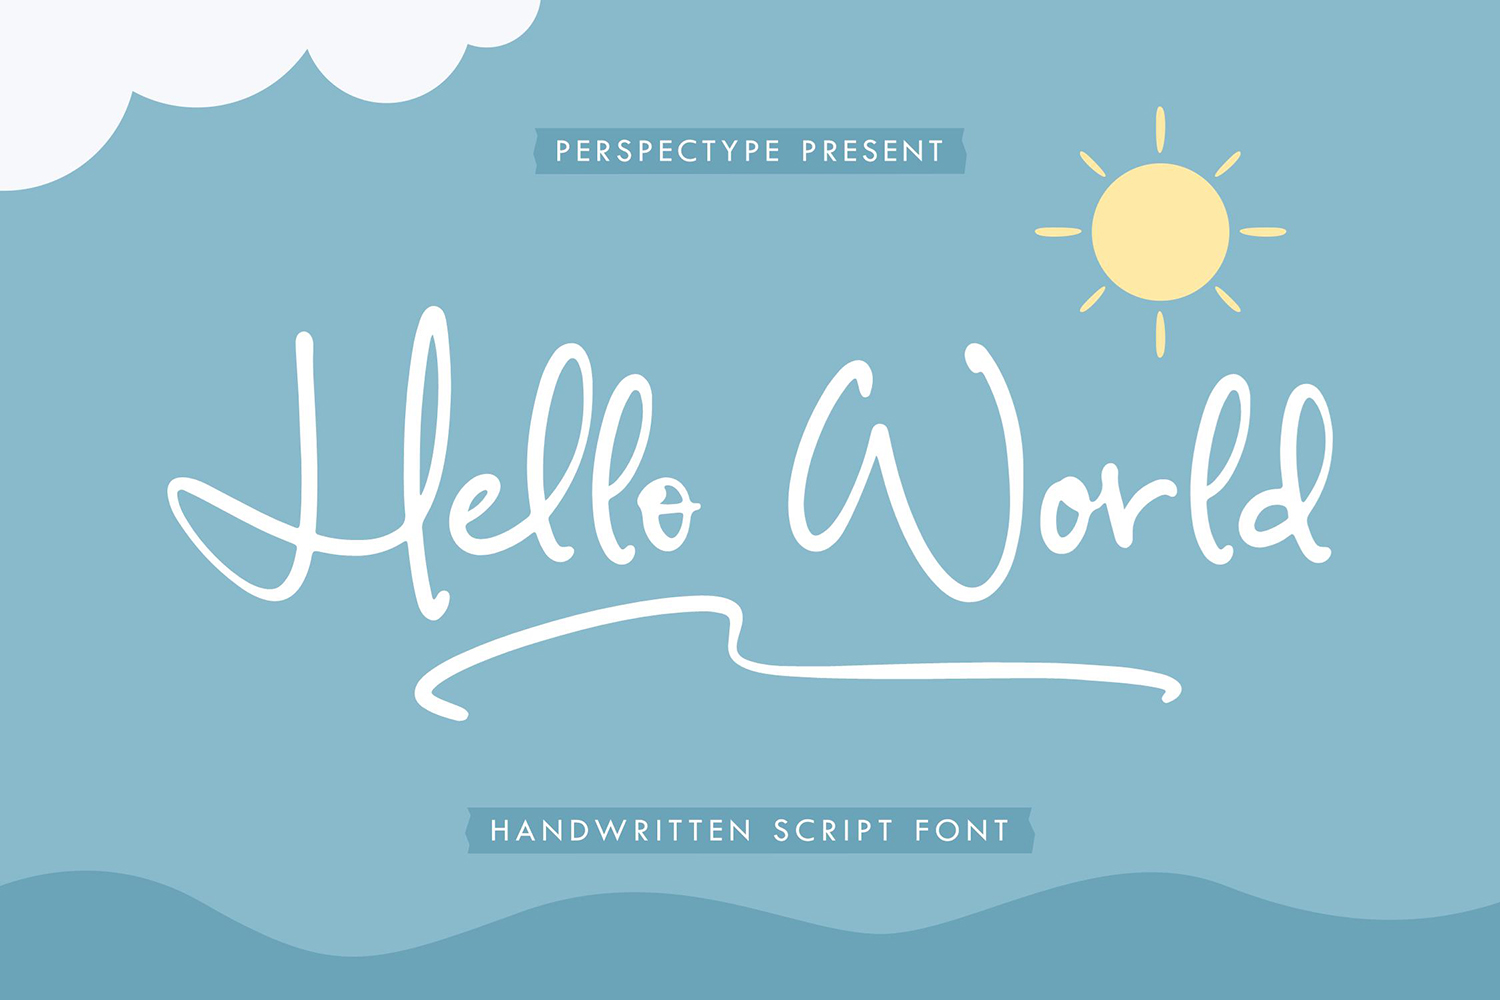 Hello World Free Font